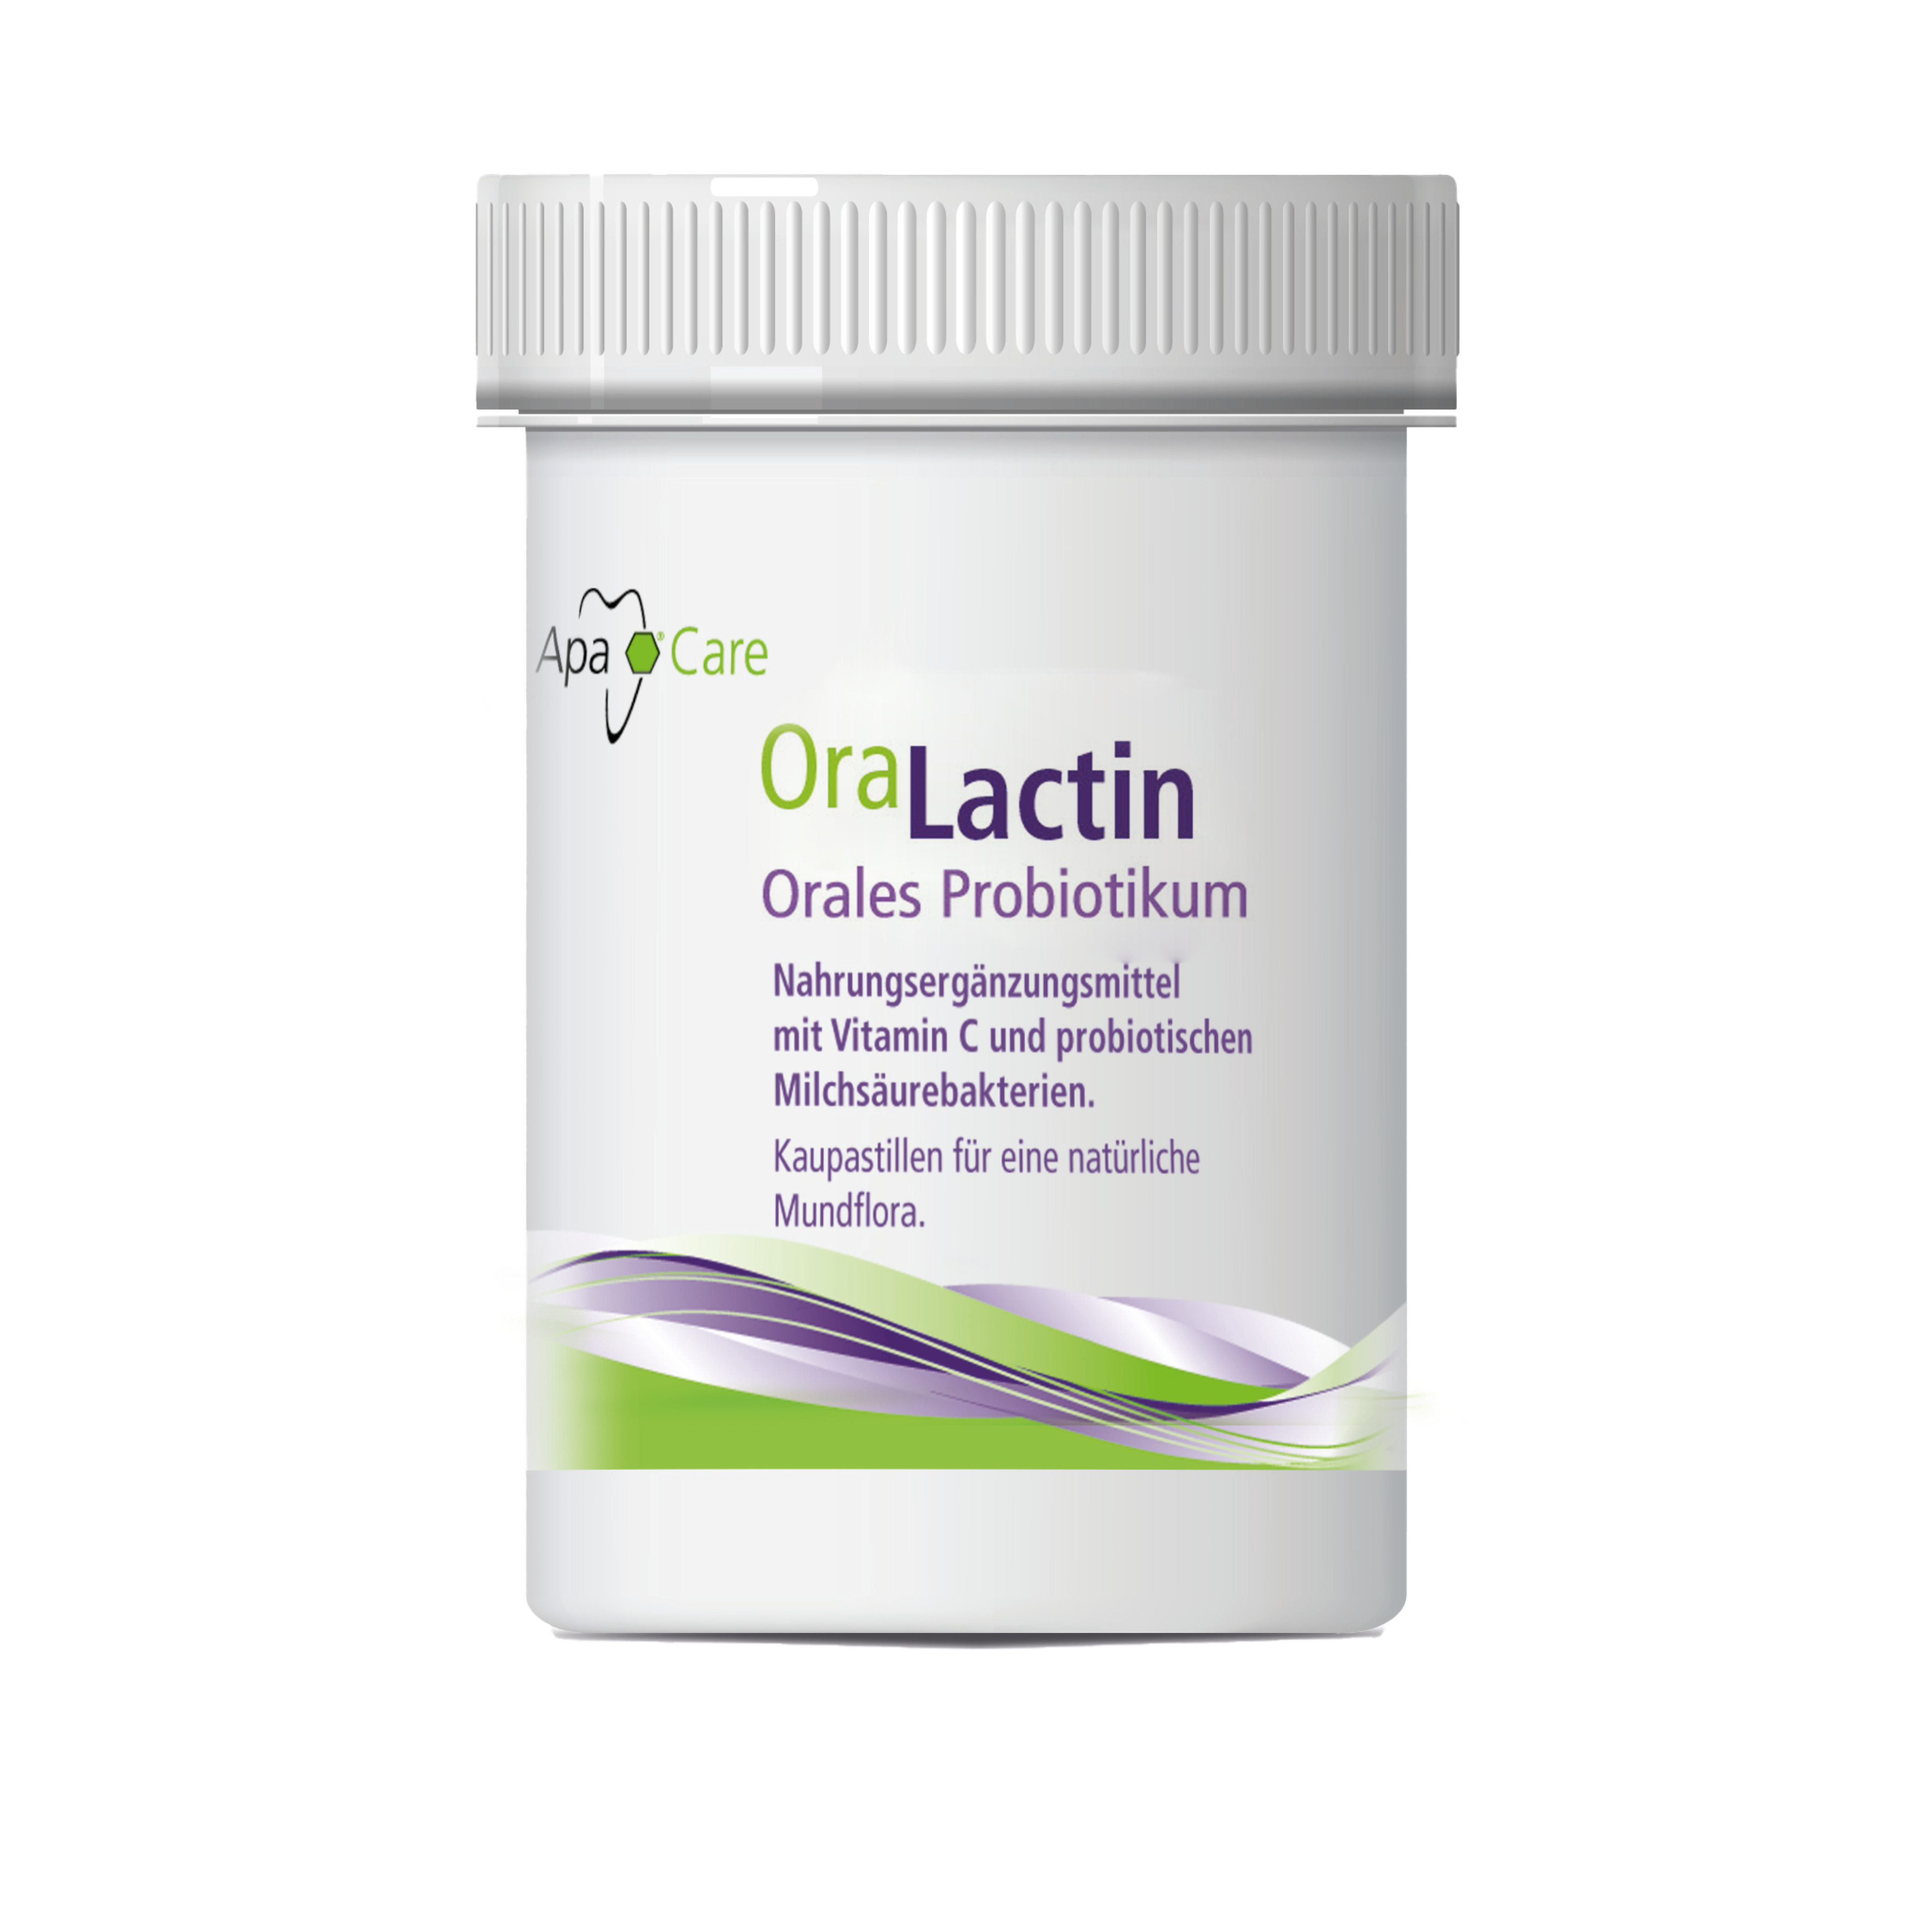 OraLactin Probiotika, Pre- und Postbiotika-Set